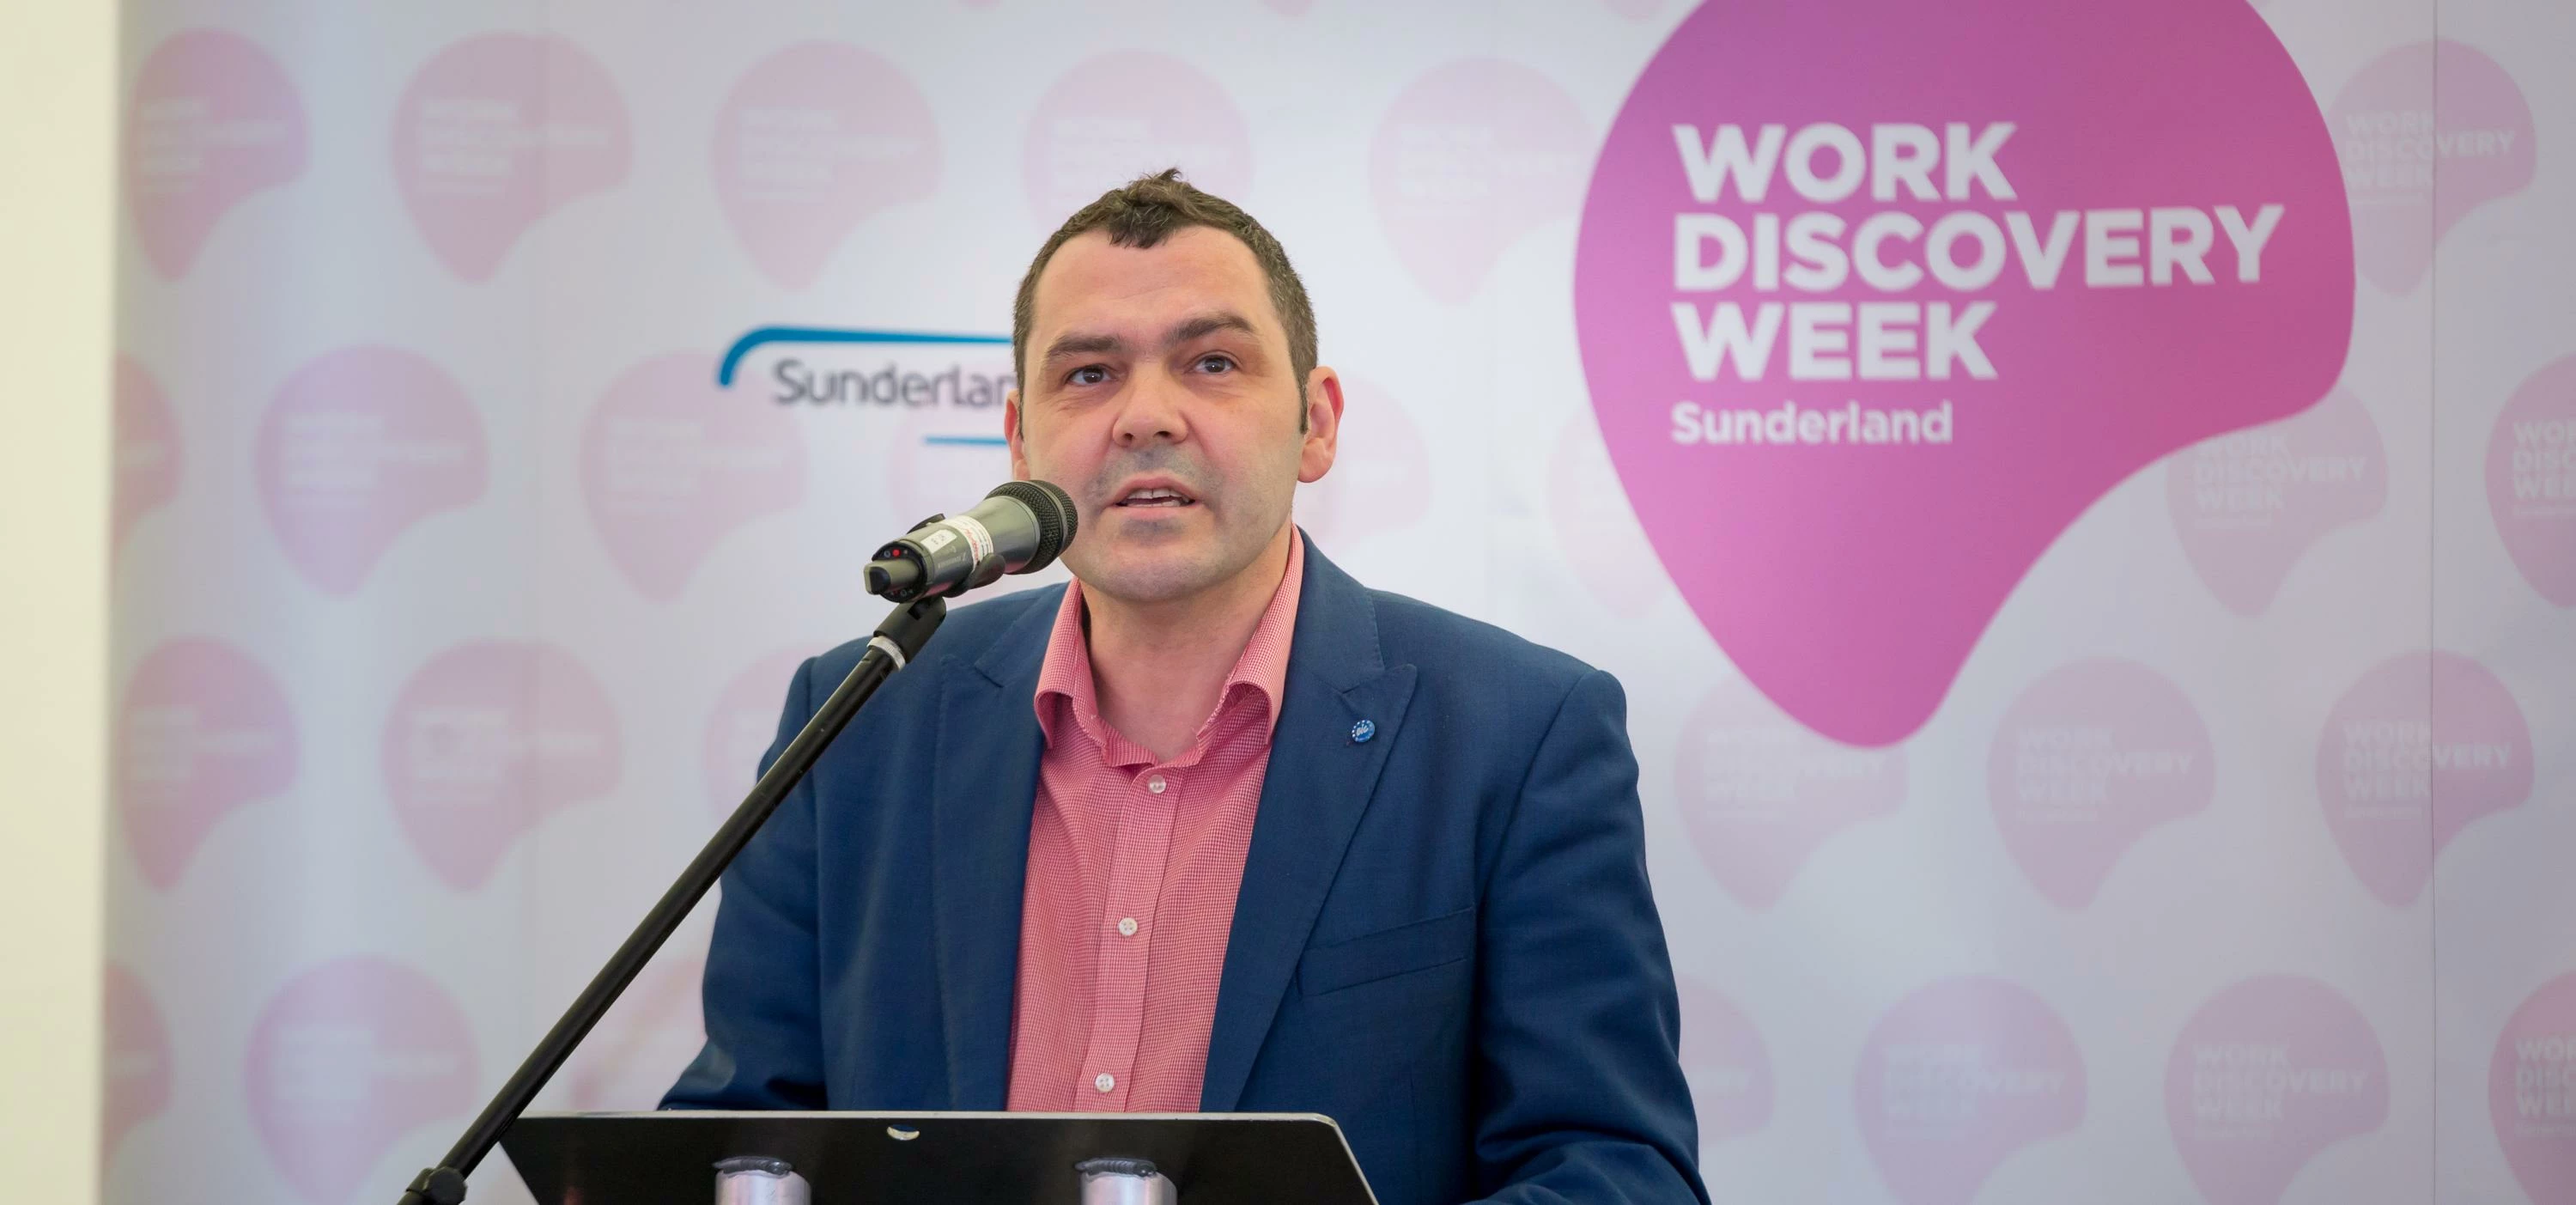 Co-chair of Work Discovery Sunderland Paul McEldon